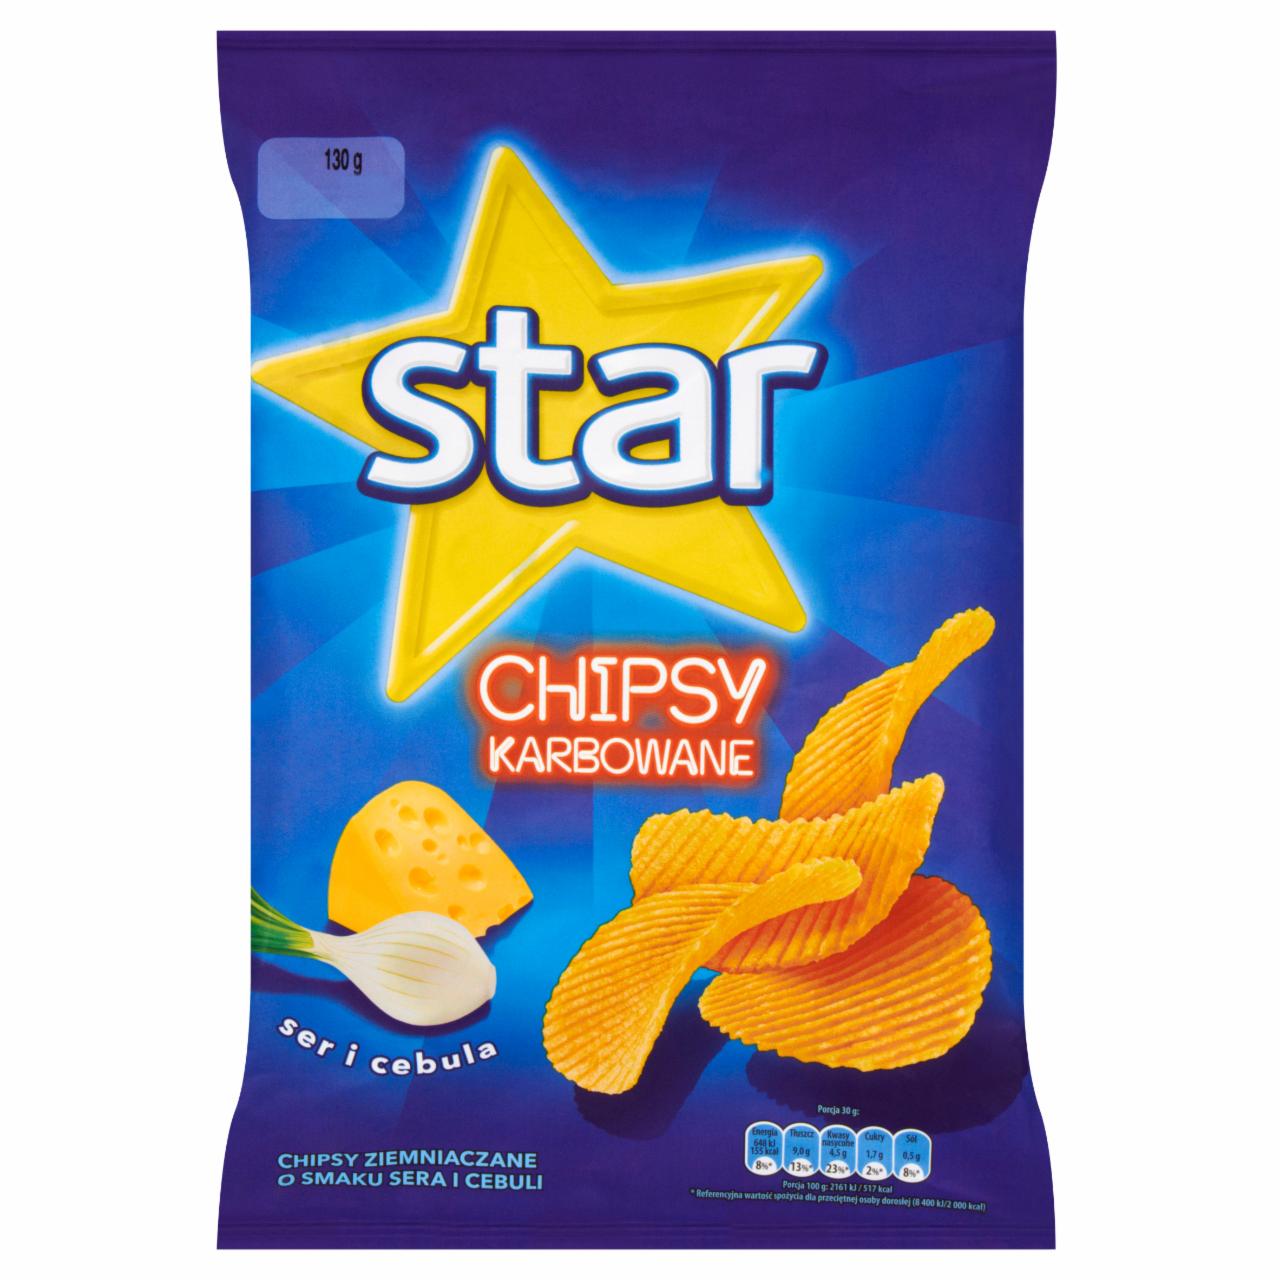 Zdjęcia - Star Chipsy karbowane ser i cebula 130 g